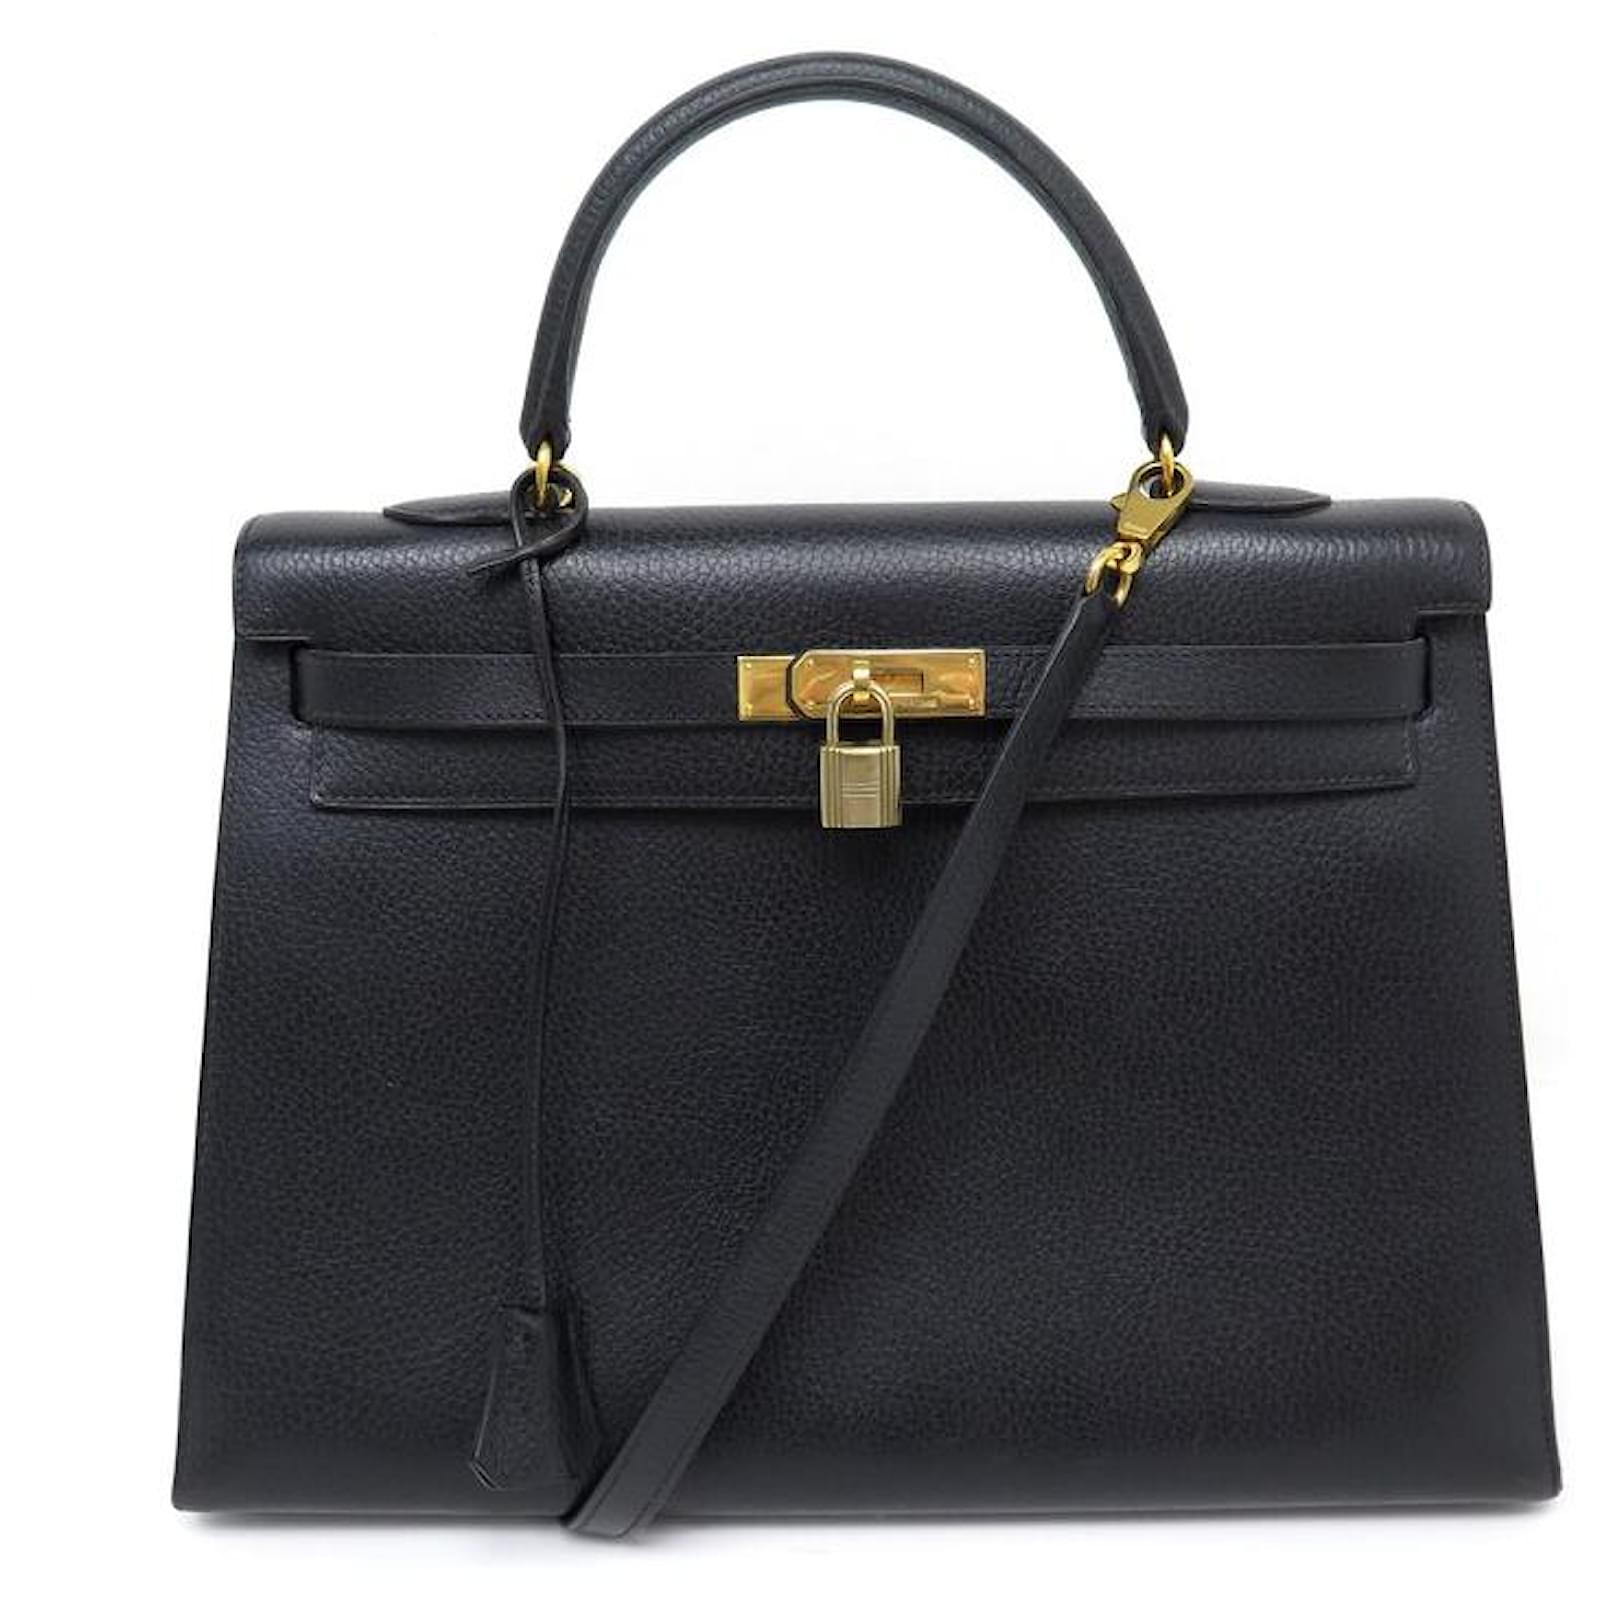 Handbags Hermès Vintage Hermes Kelly Handbag 35 Sellier in Black Togo Leather Bandoulier Purse